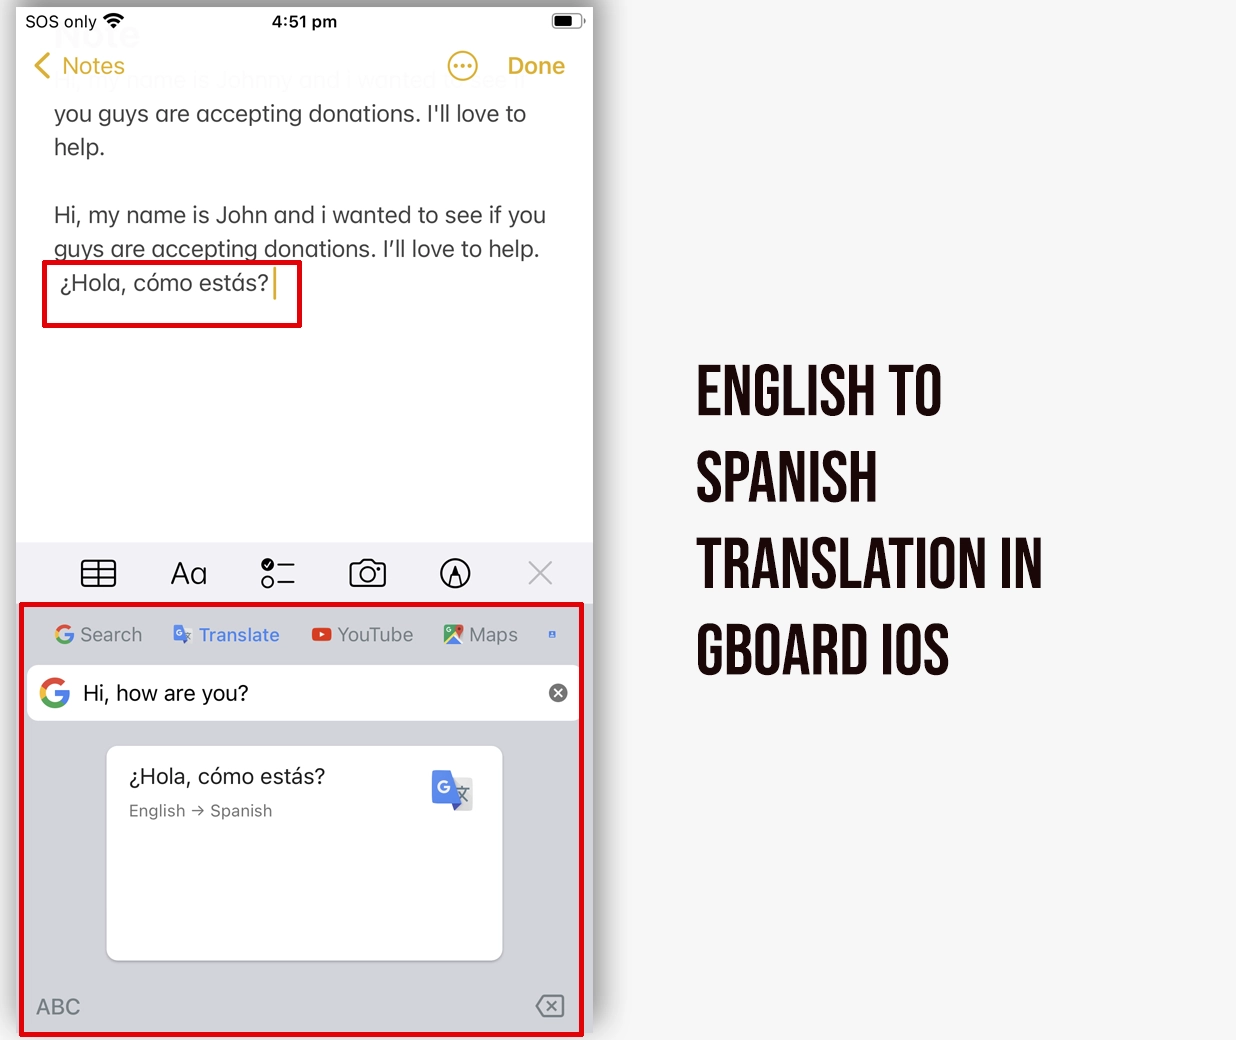 English to Spanish Translation in Gboard iOS